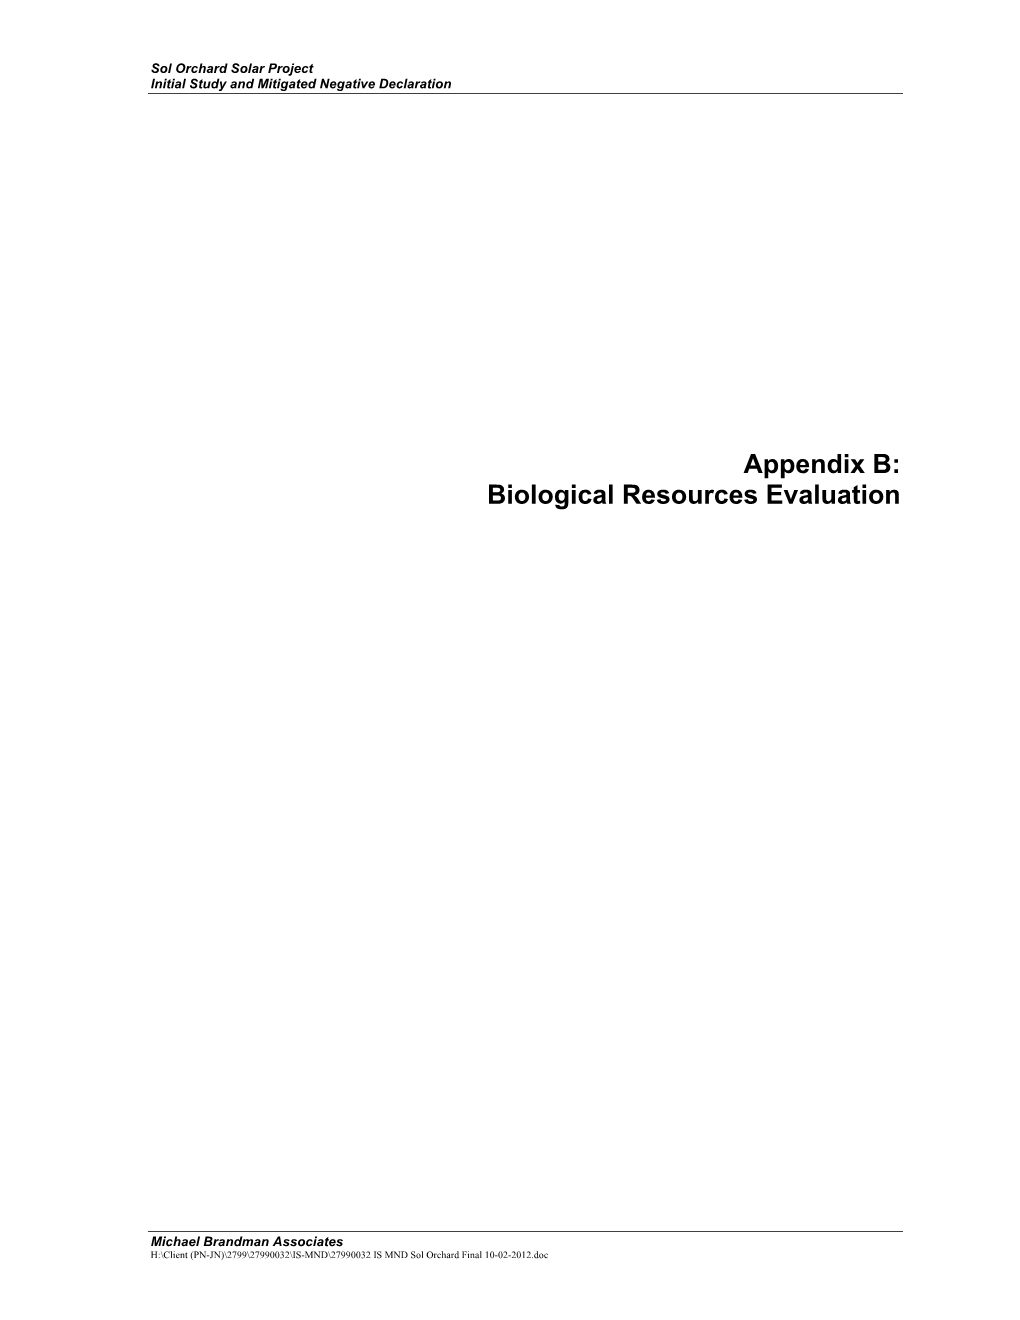 Appendix B: Biological Resources Evaluation